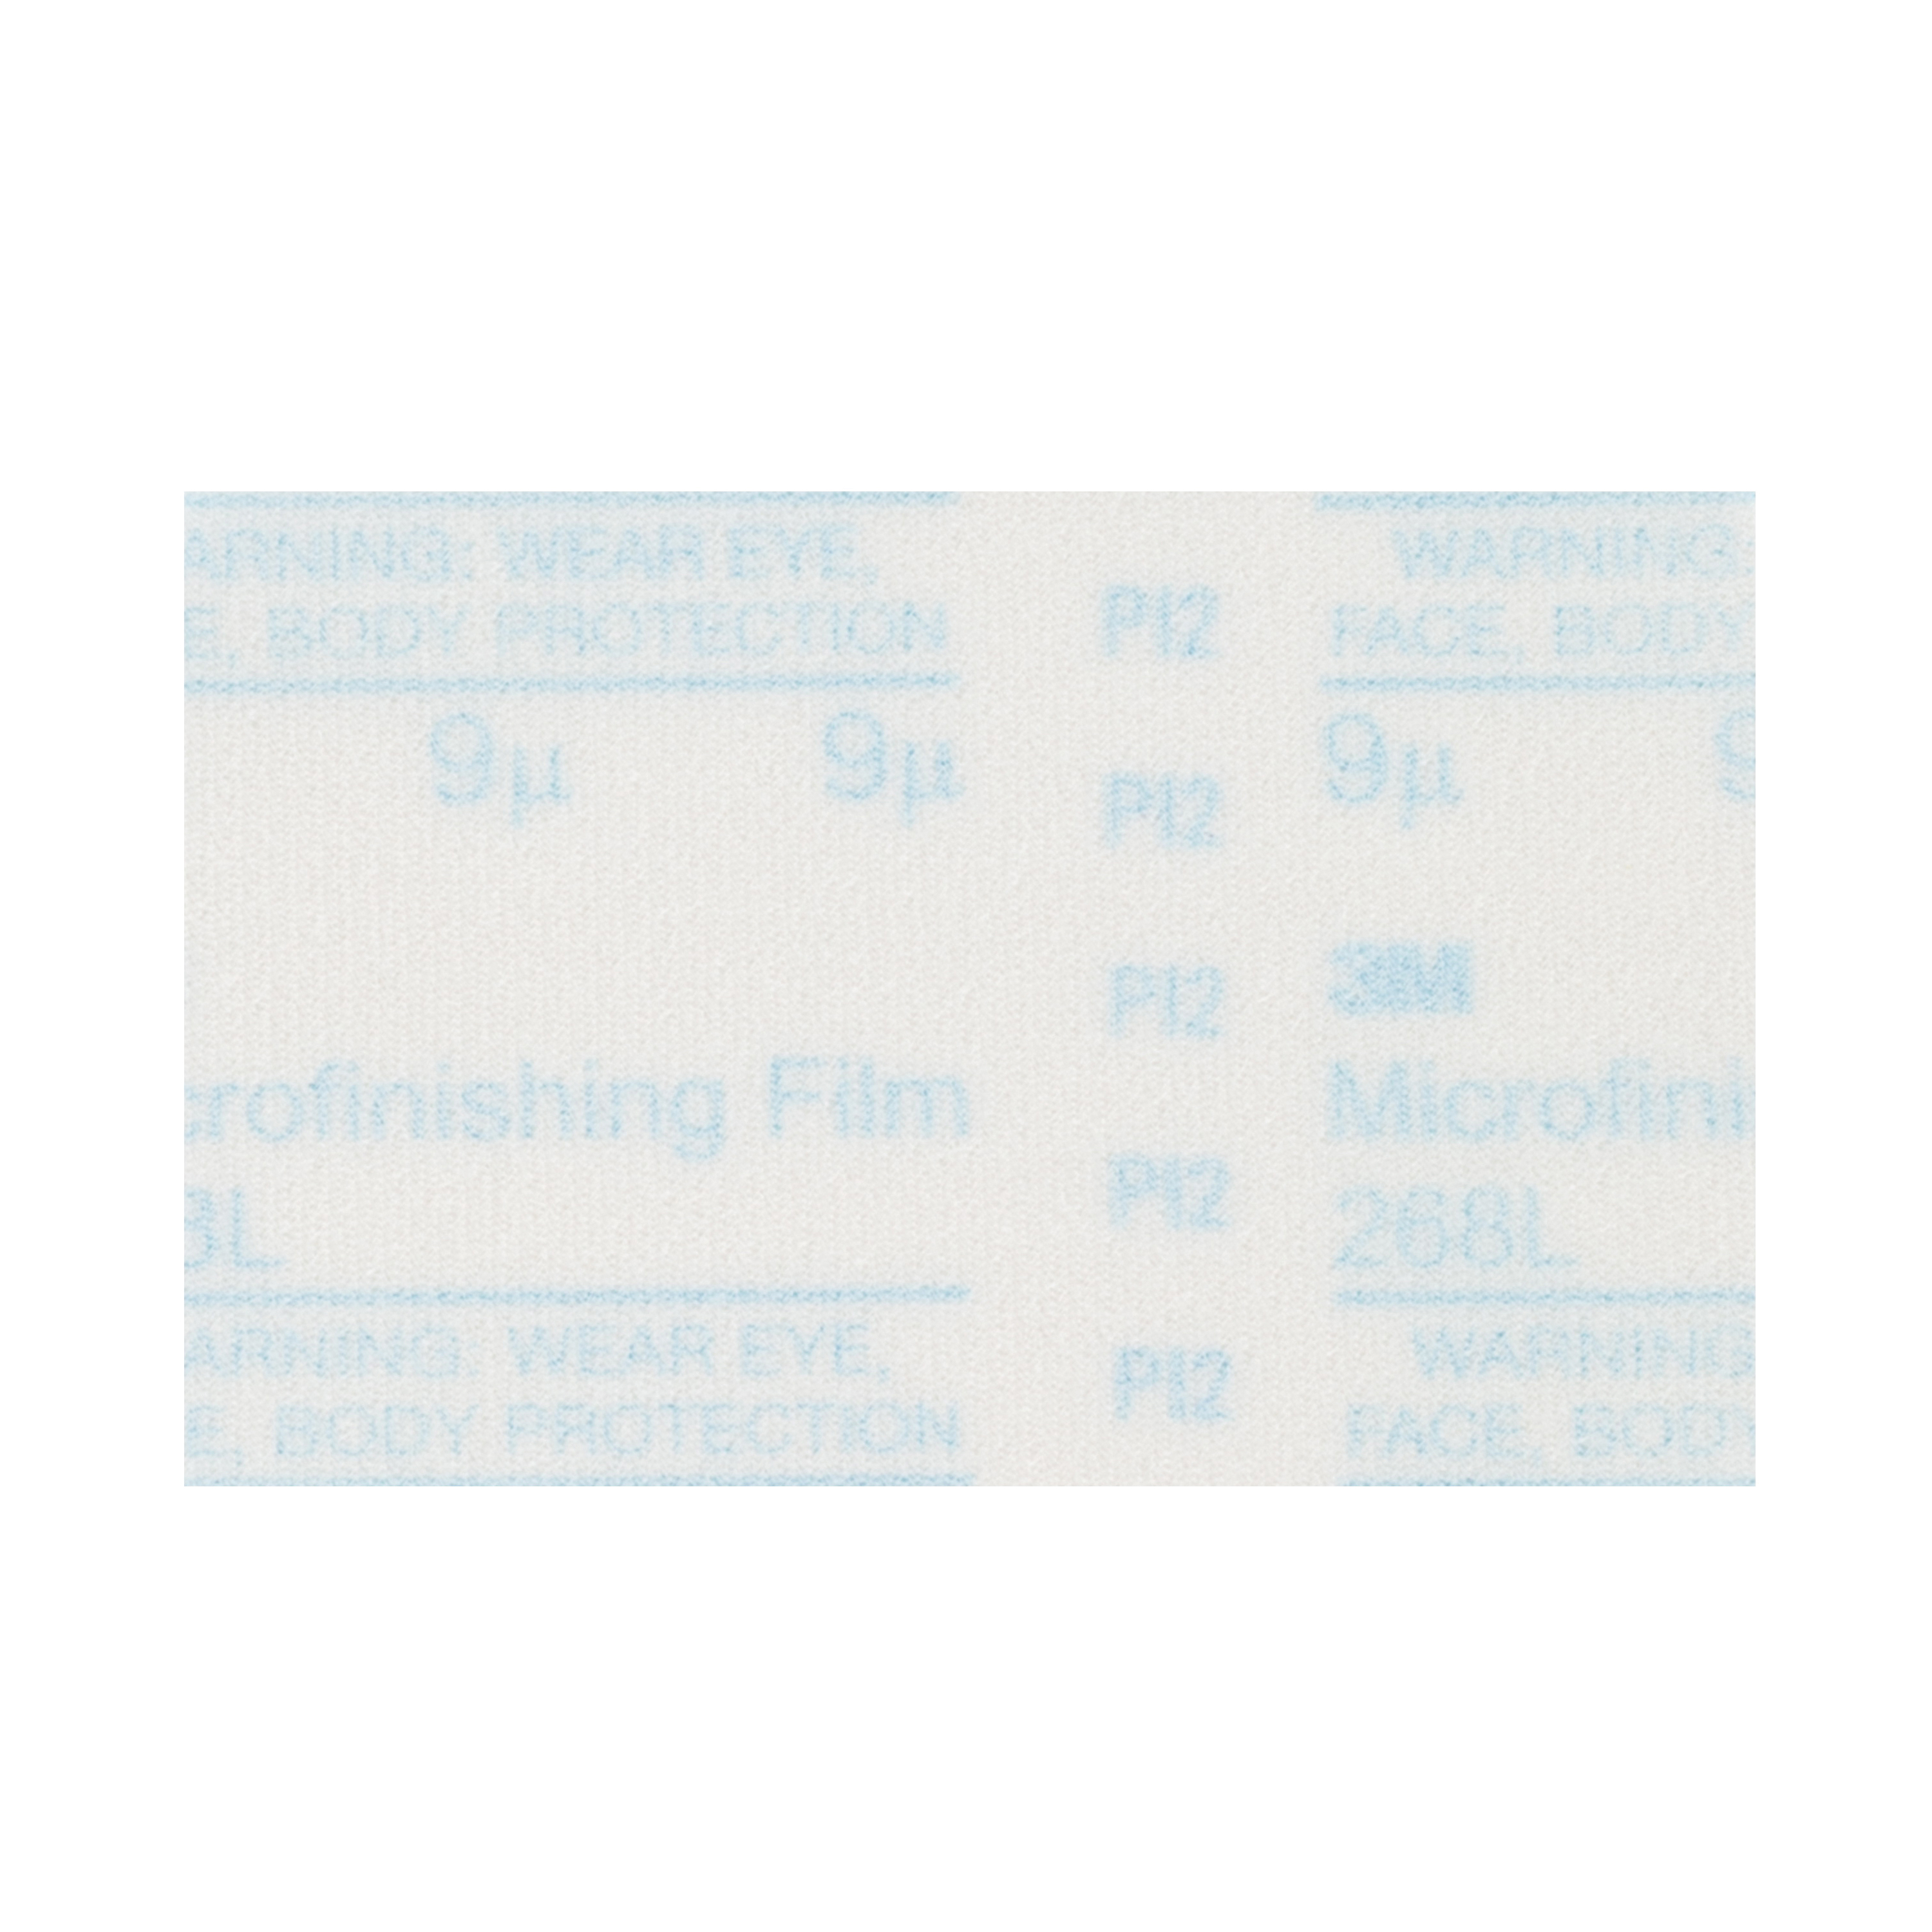 3M™ 051111-49993 268L Type D Microfinishing PSA Carbide Burr Set, 12 in Dia Disc, 15 micron Grit, Super Fine Grade, Aluminum Oxide Abrasive, Polyester Film Backing